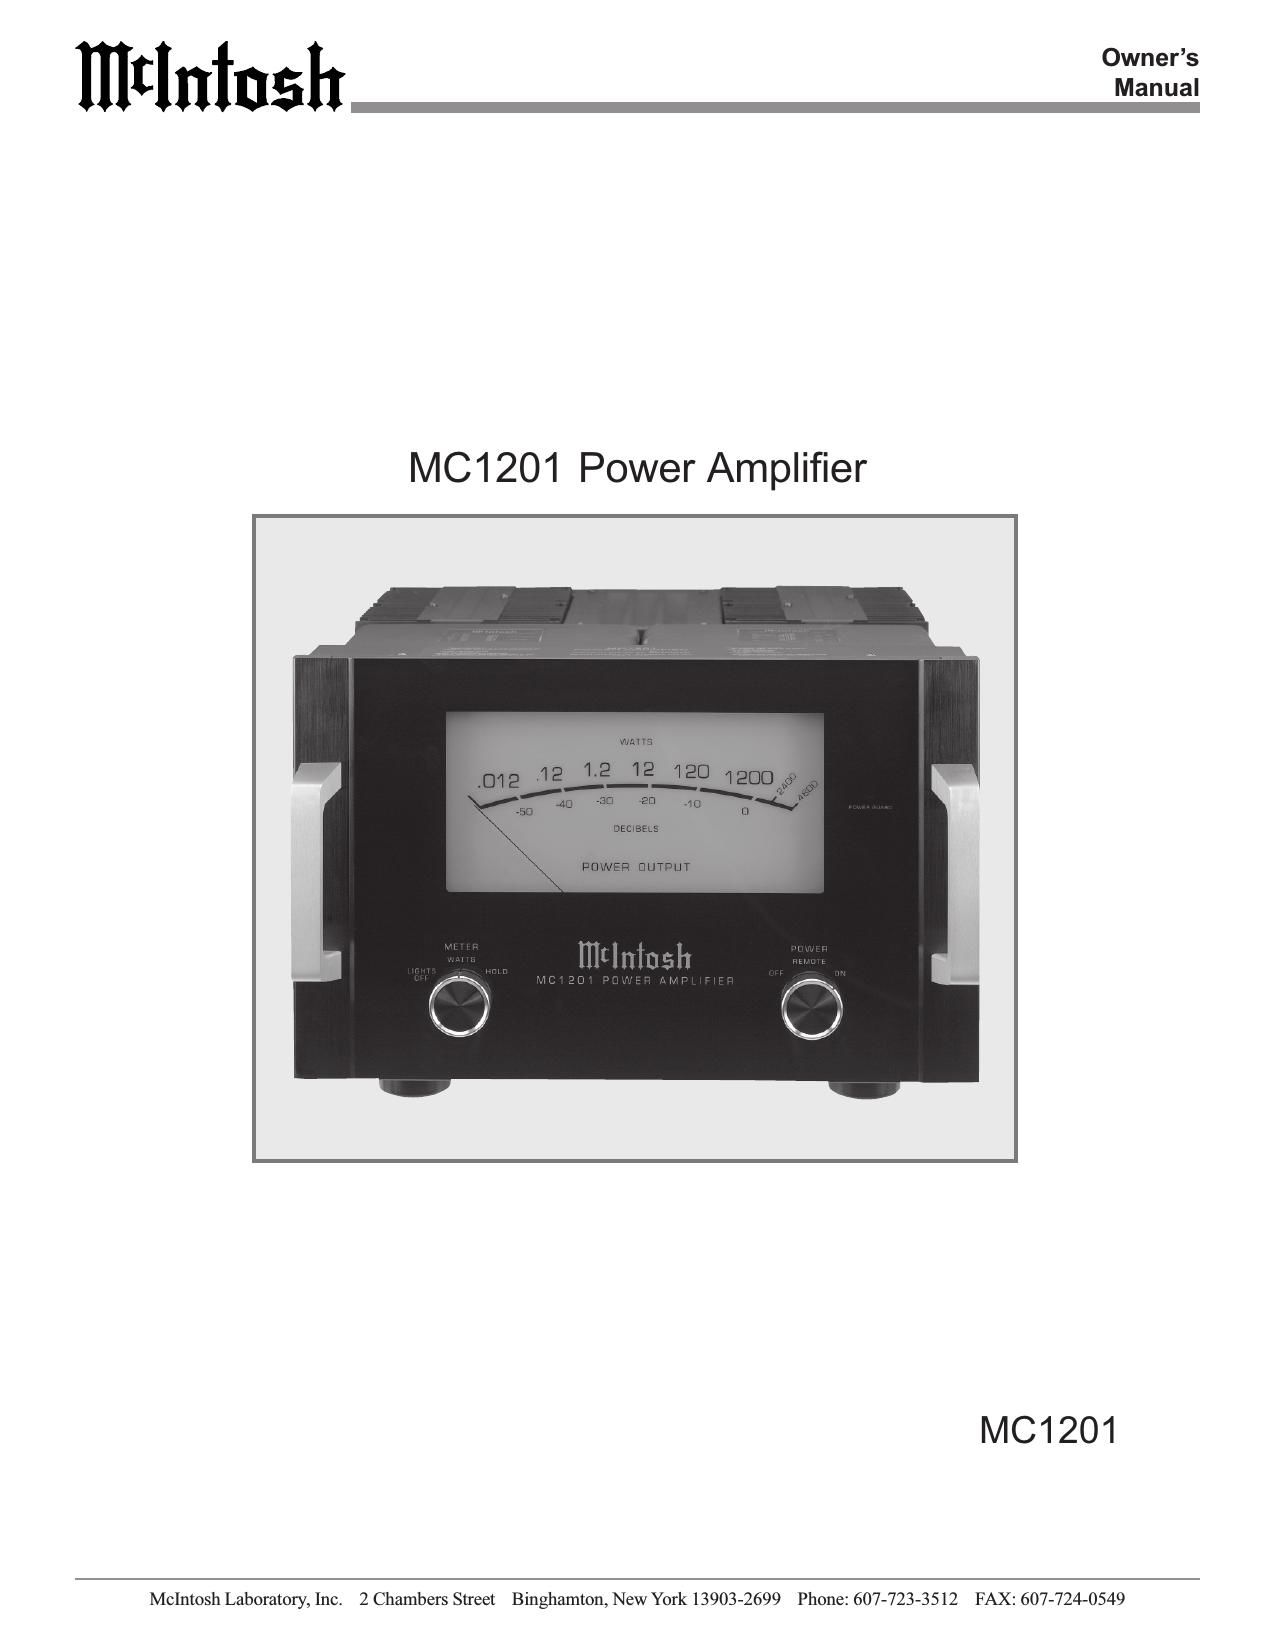 McIntosh MC 1201 Owners Manual